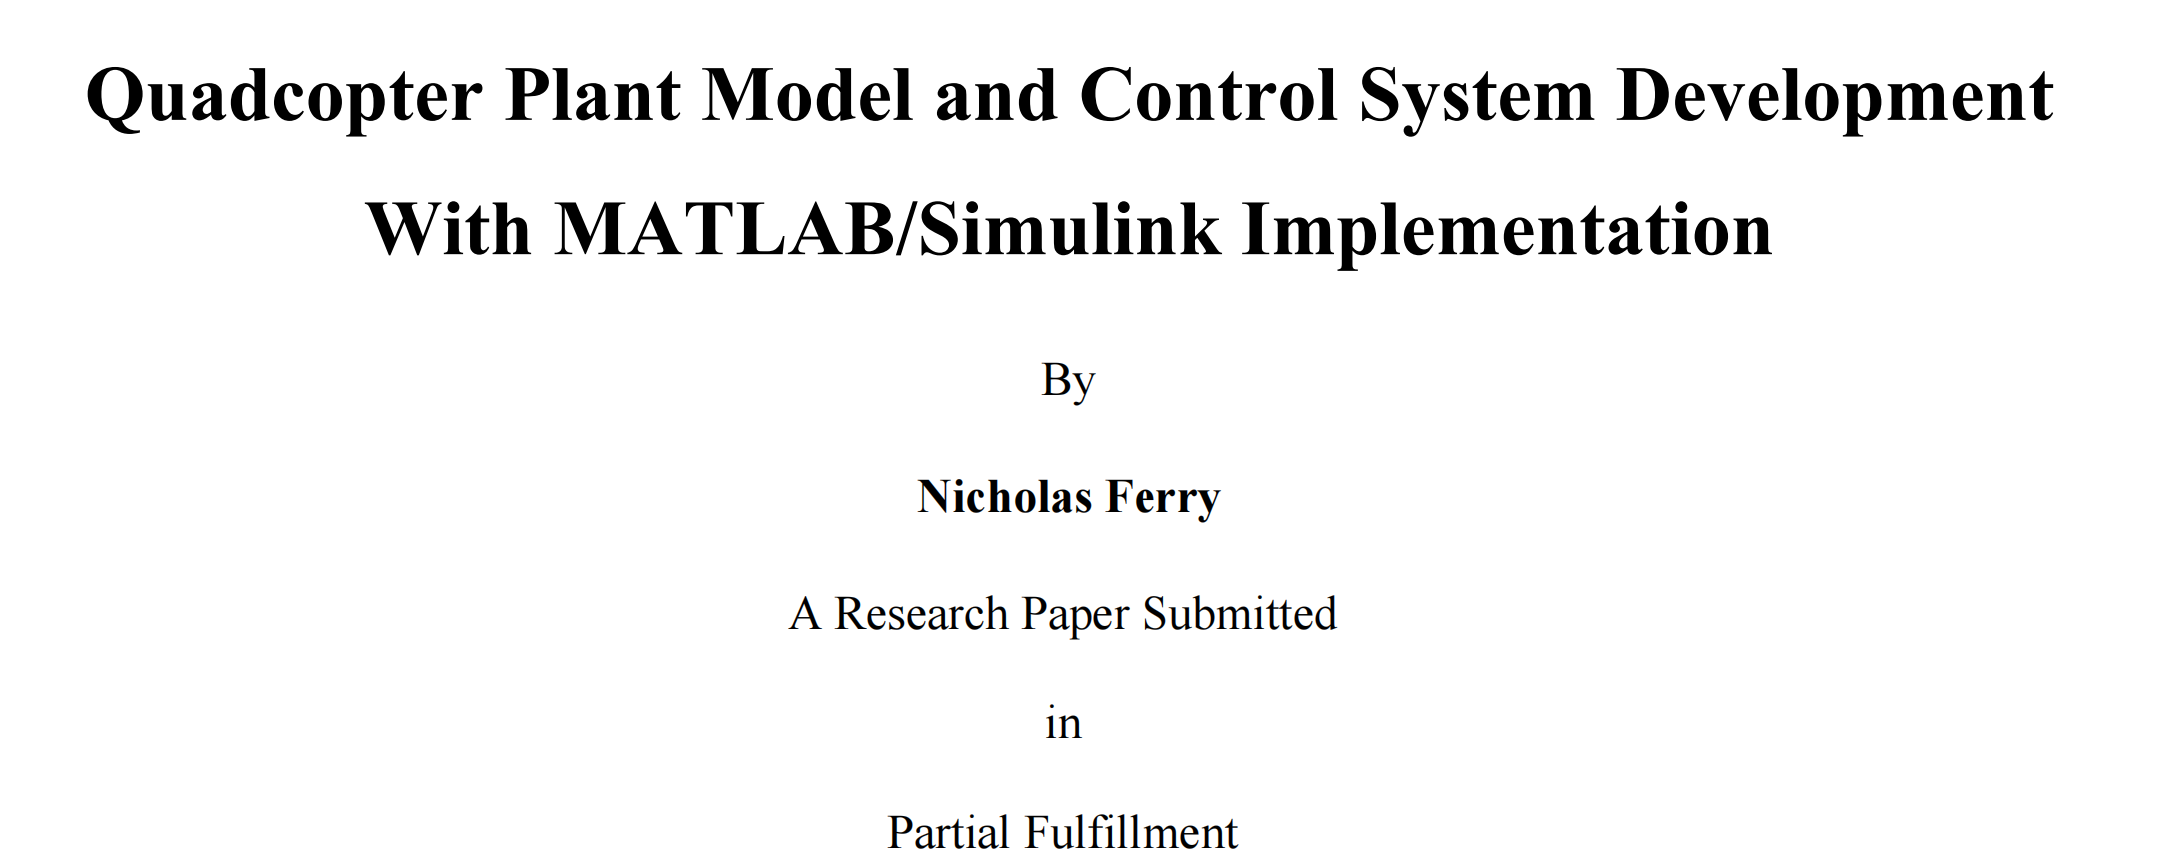 四旋翼飞行器基本模型（MatlabSimulink）